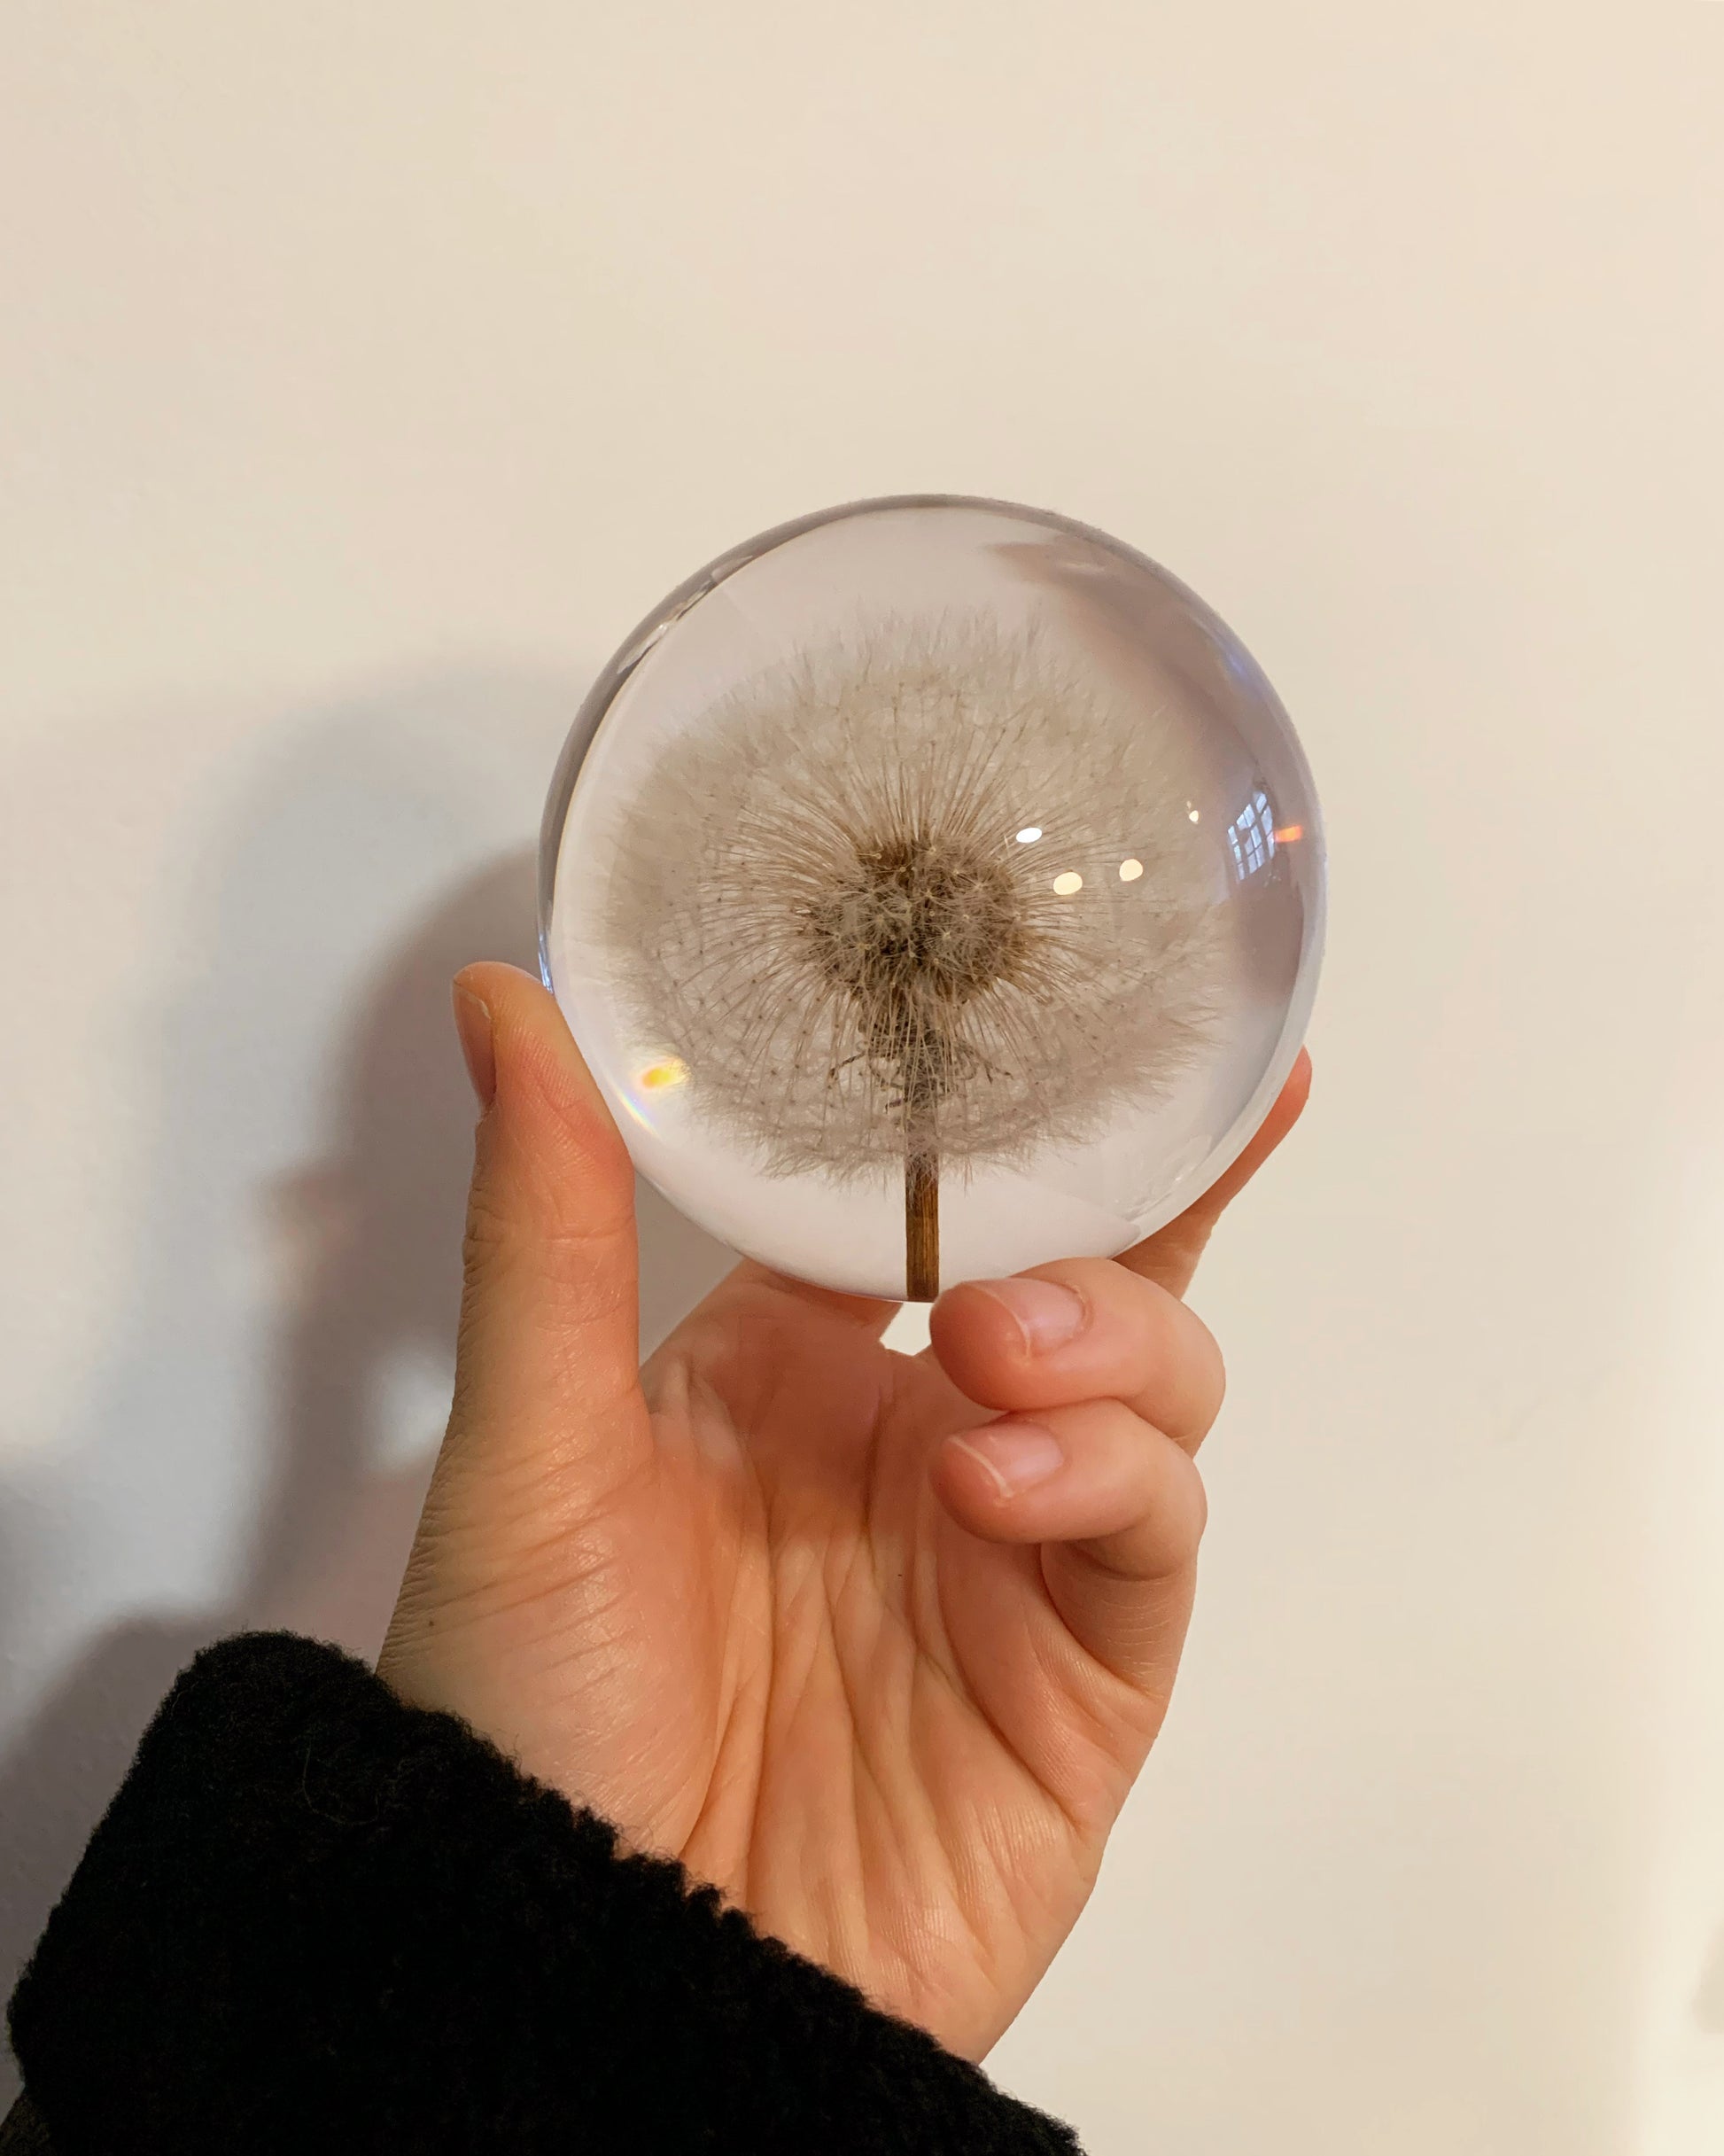 Crystal ball encapsulating a full preserved dandelion